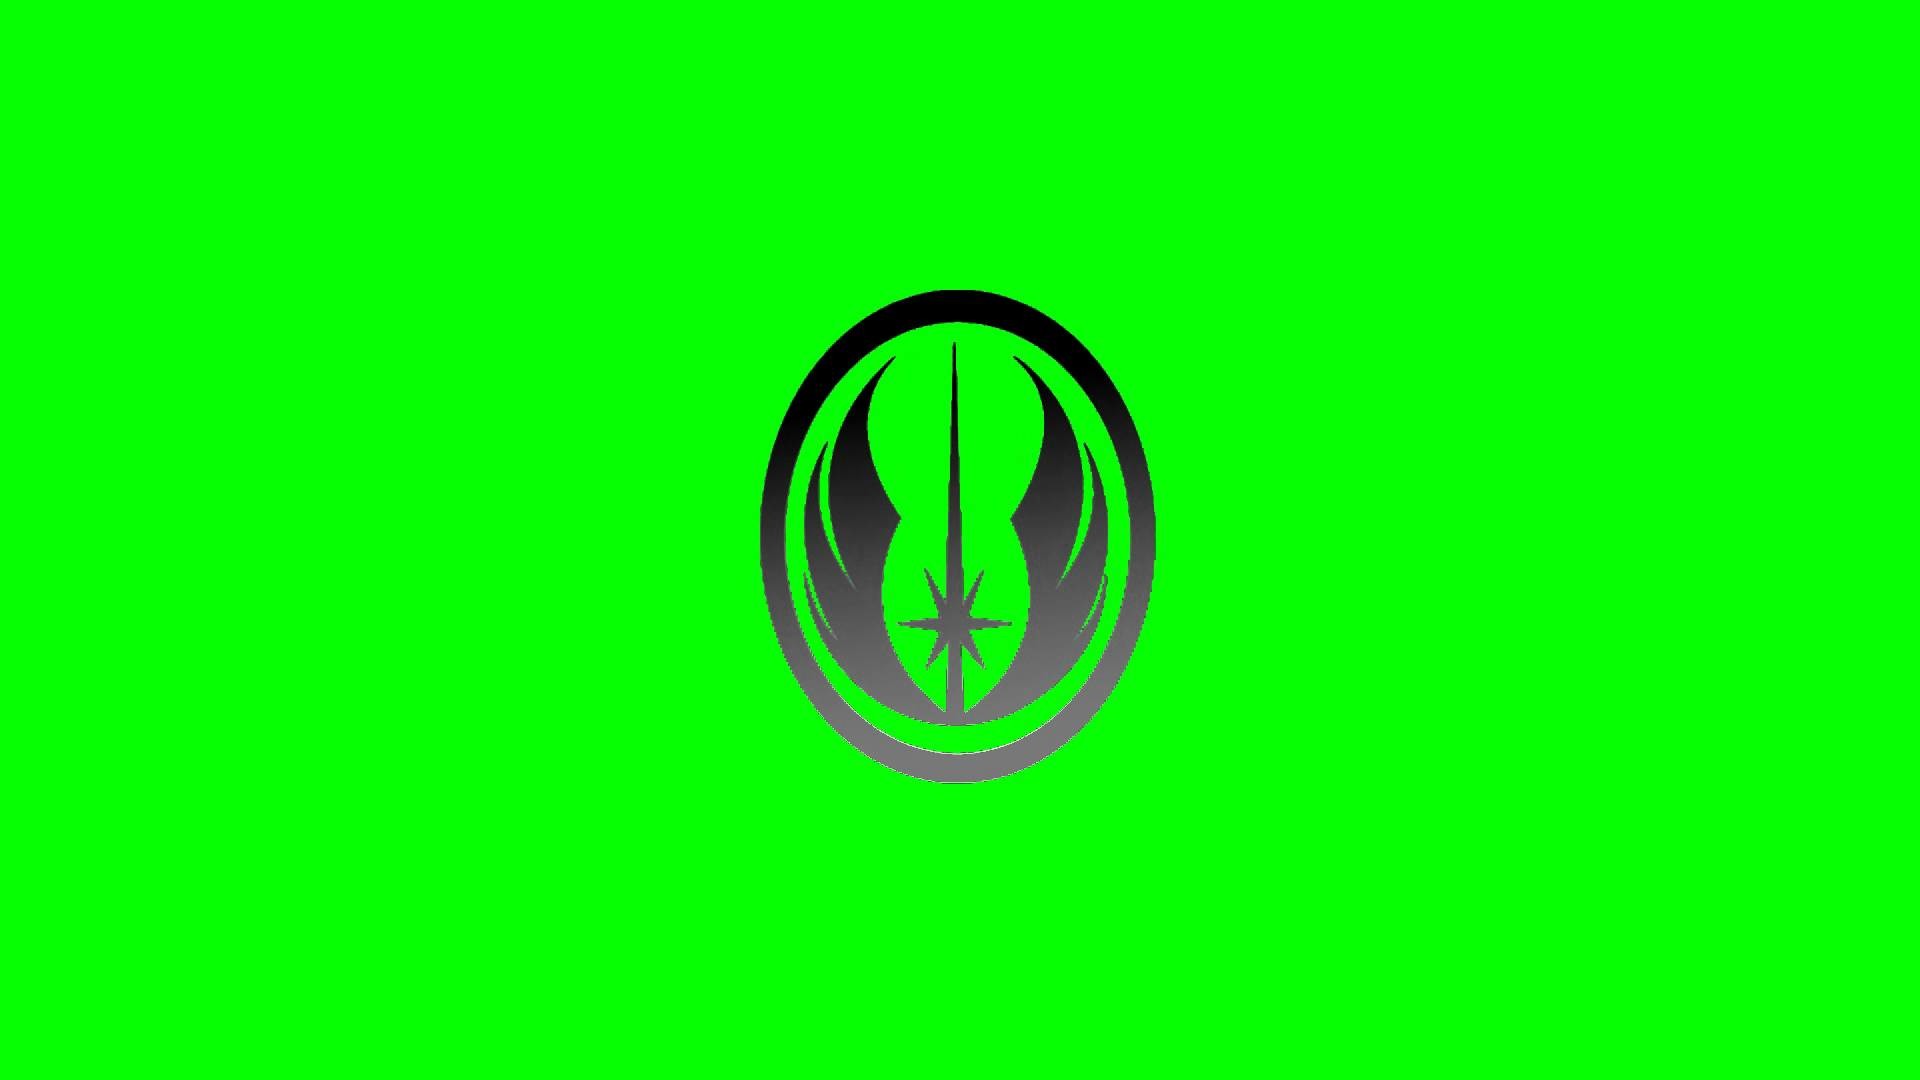 Star Wars Jedi Order Symbol – Green Screen Animation